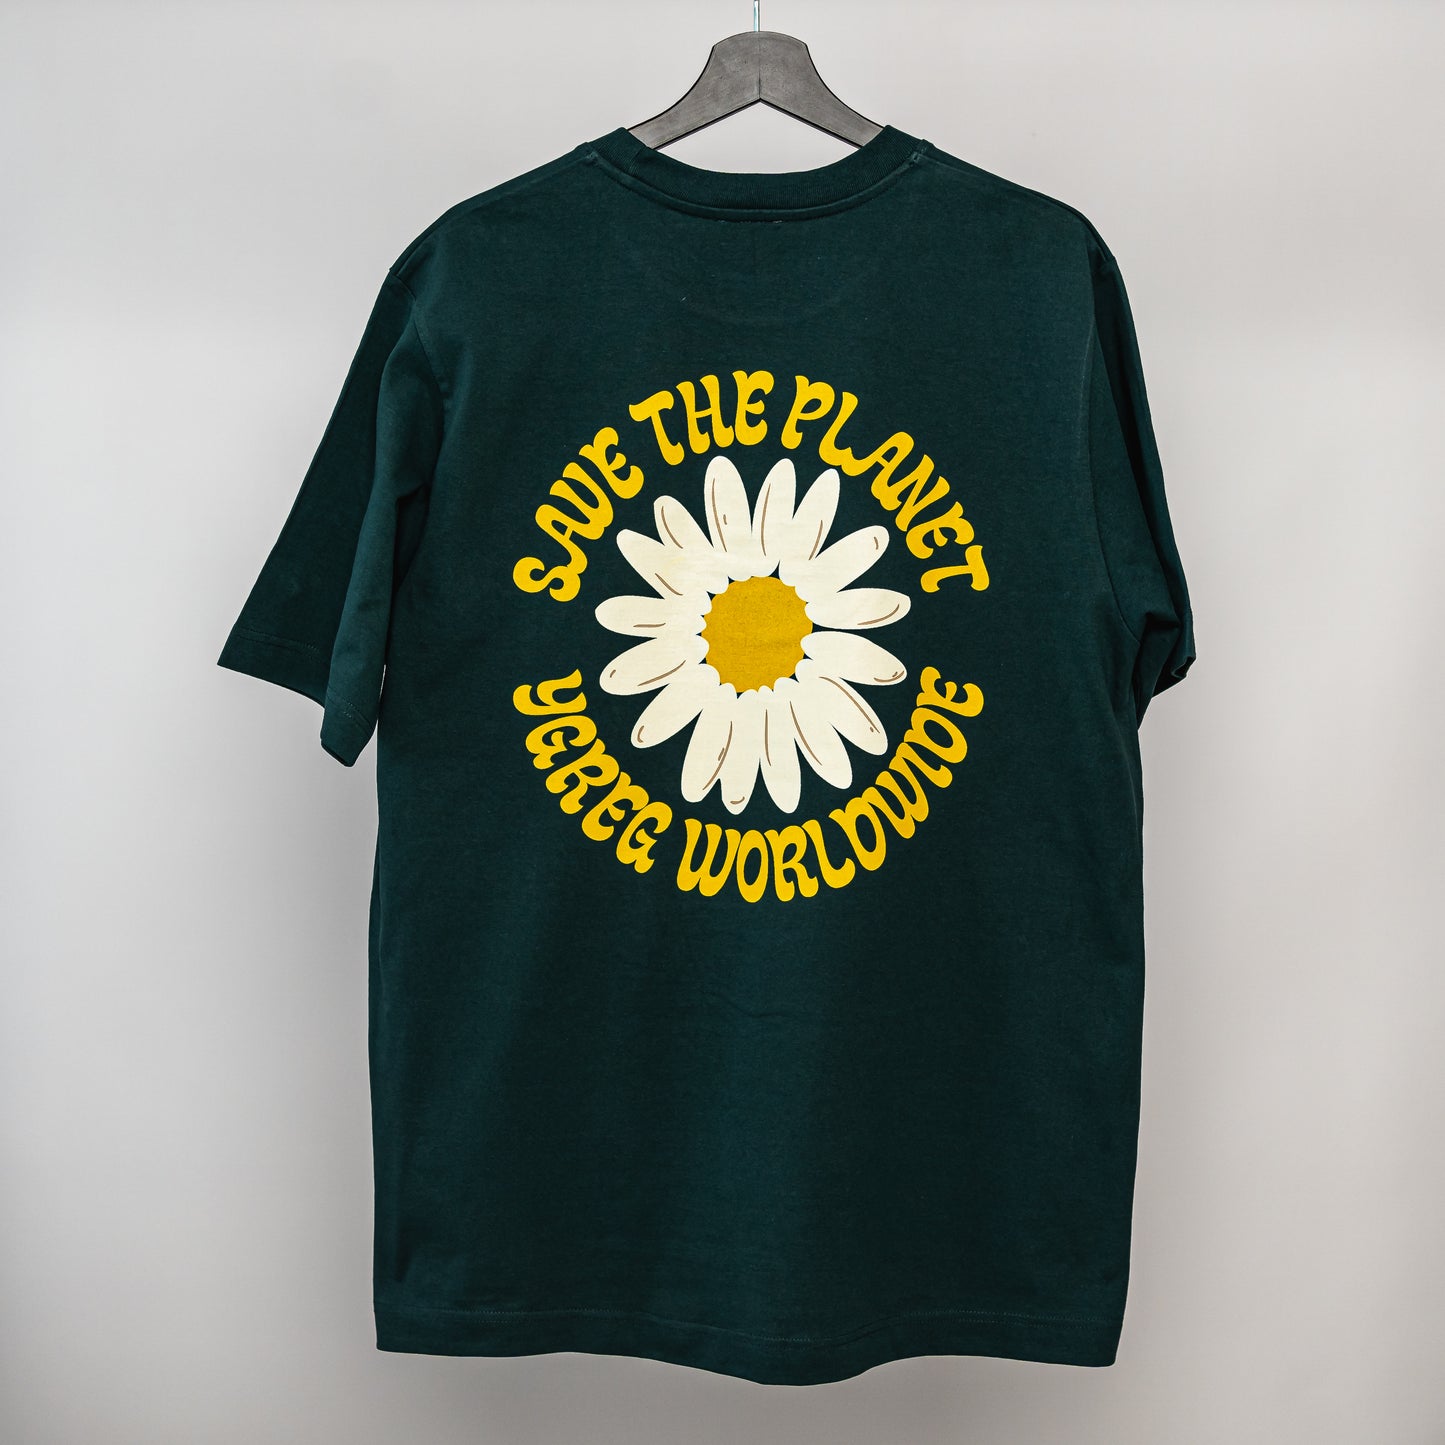 YGREG 'Save the planet' Green t-shirt